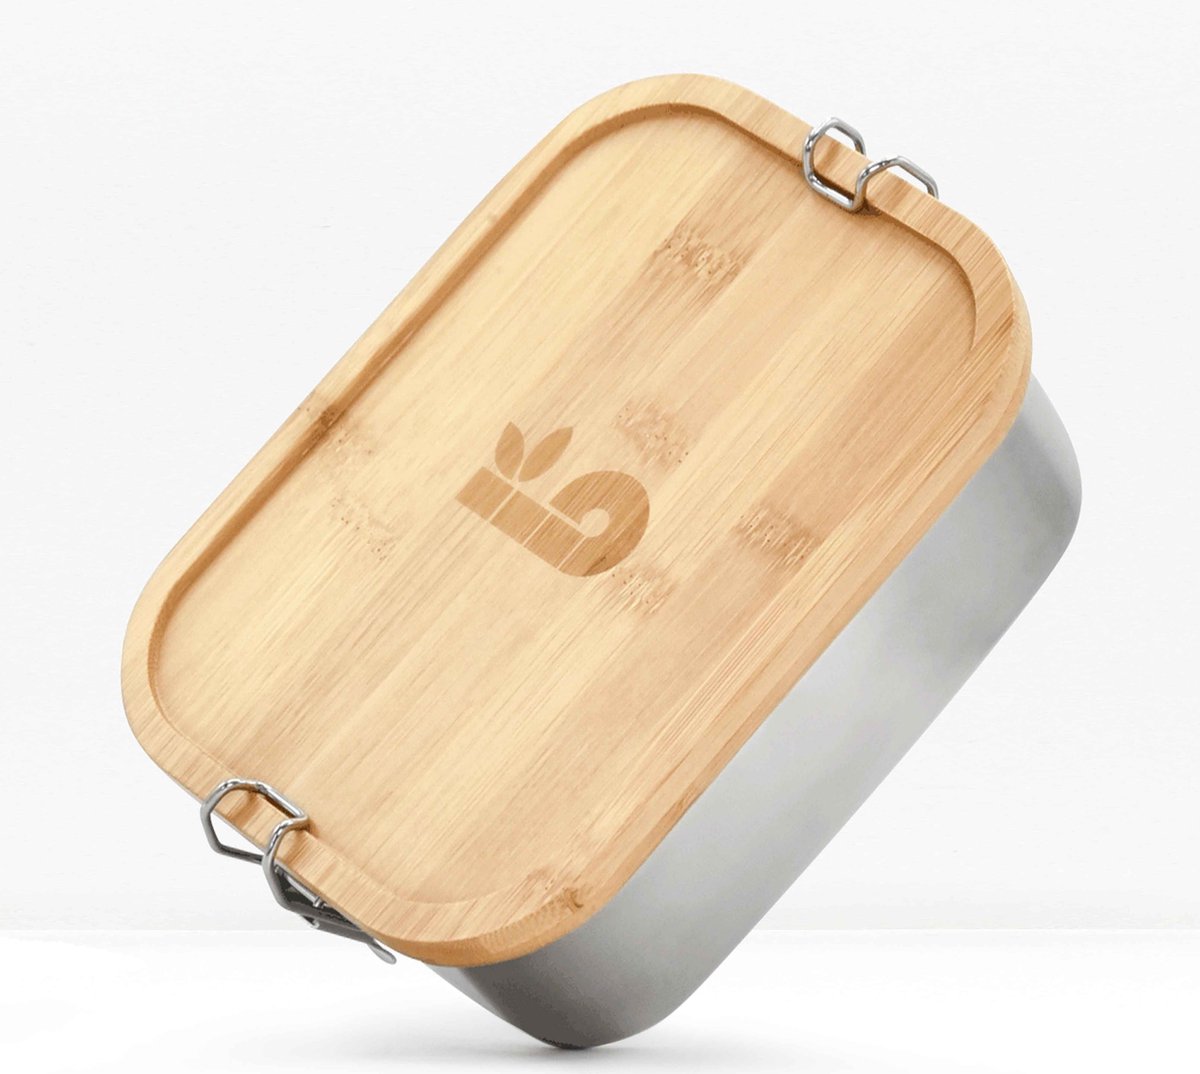 Bamboe Lunch Box 1400 ml | Broodbox | Ecologisch | Roestvrijstalen Lunchbox | Bentobox no Leak | Smaakloos | Bamboe Grote Broodtrommel | Lunchbox Volwassenen | Lunchbox RVS Bamboe | Bambaw